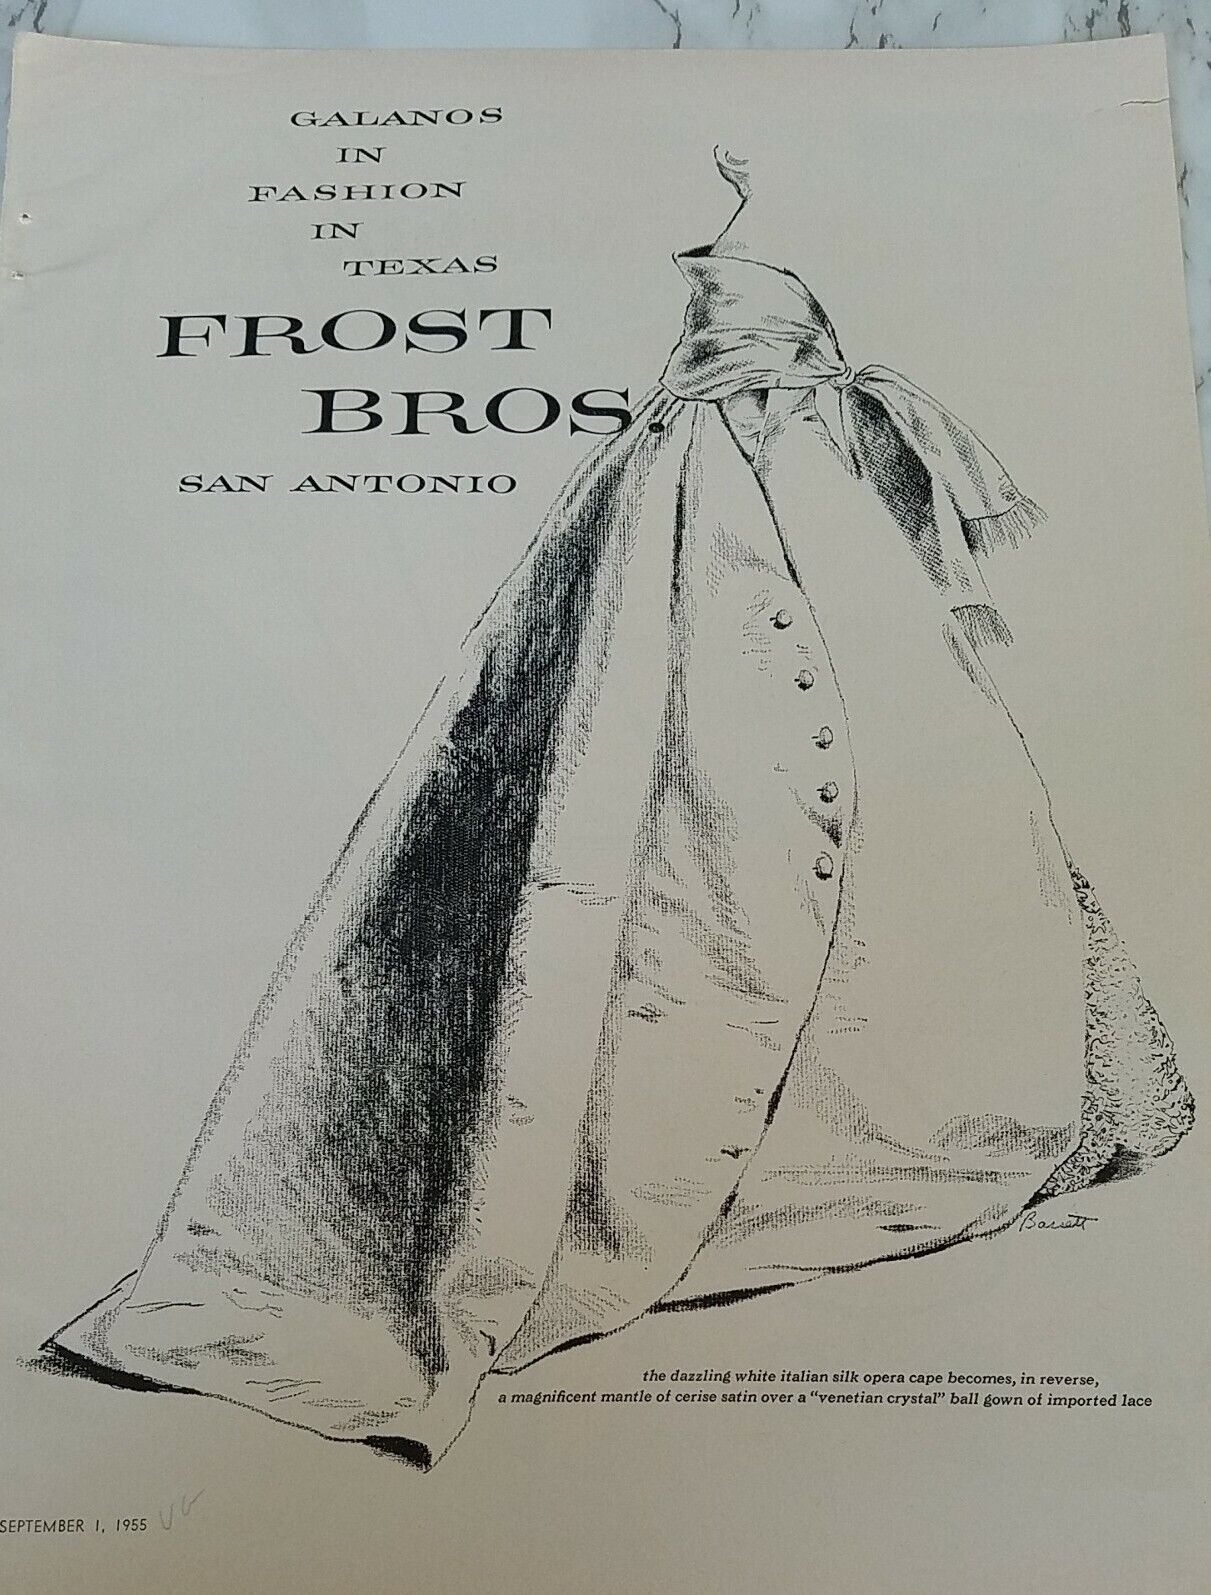 1955 womens Galanos Italian silk opera cape Frost Bros San Antonio TX vintage ad